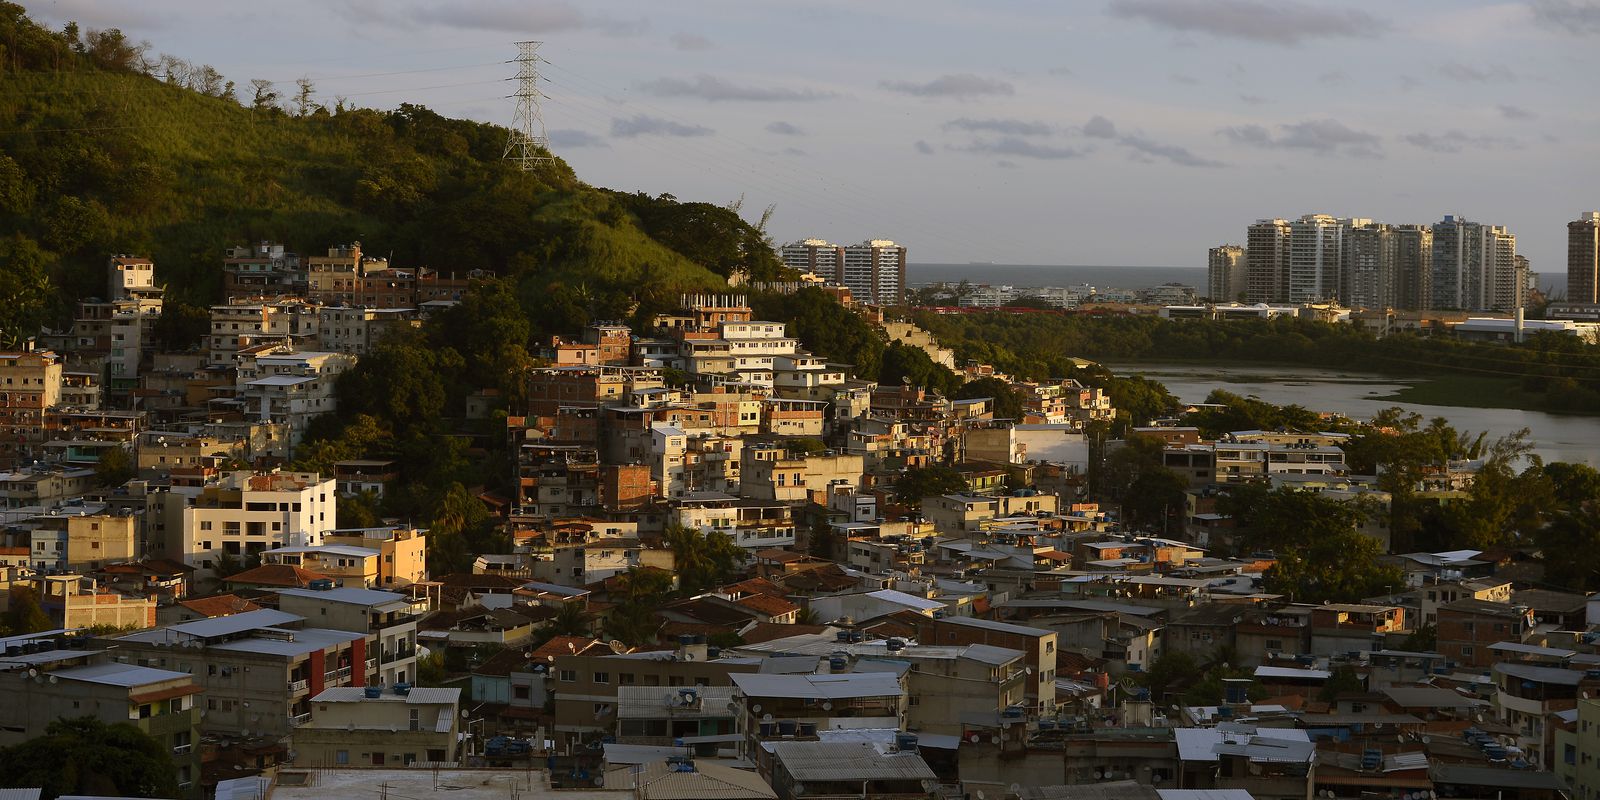 Illegal exploitation of real estate leads Rio police to fight militia